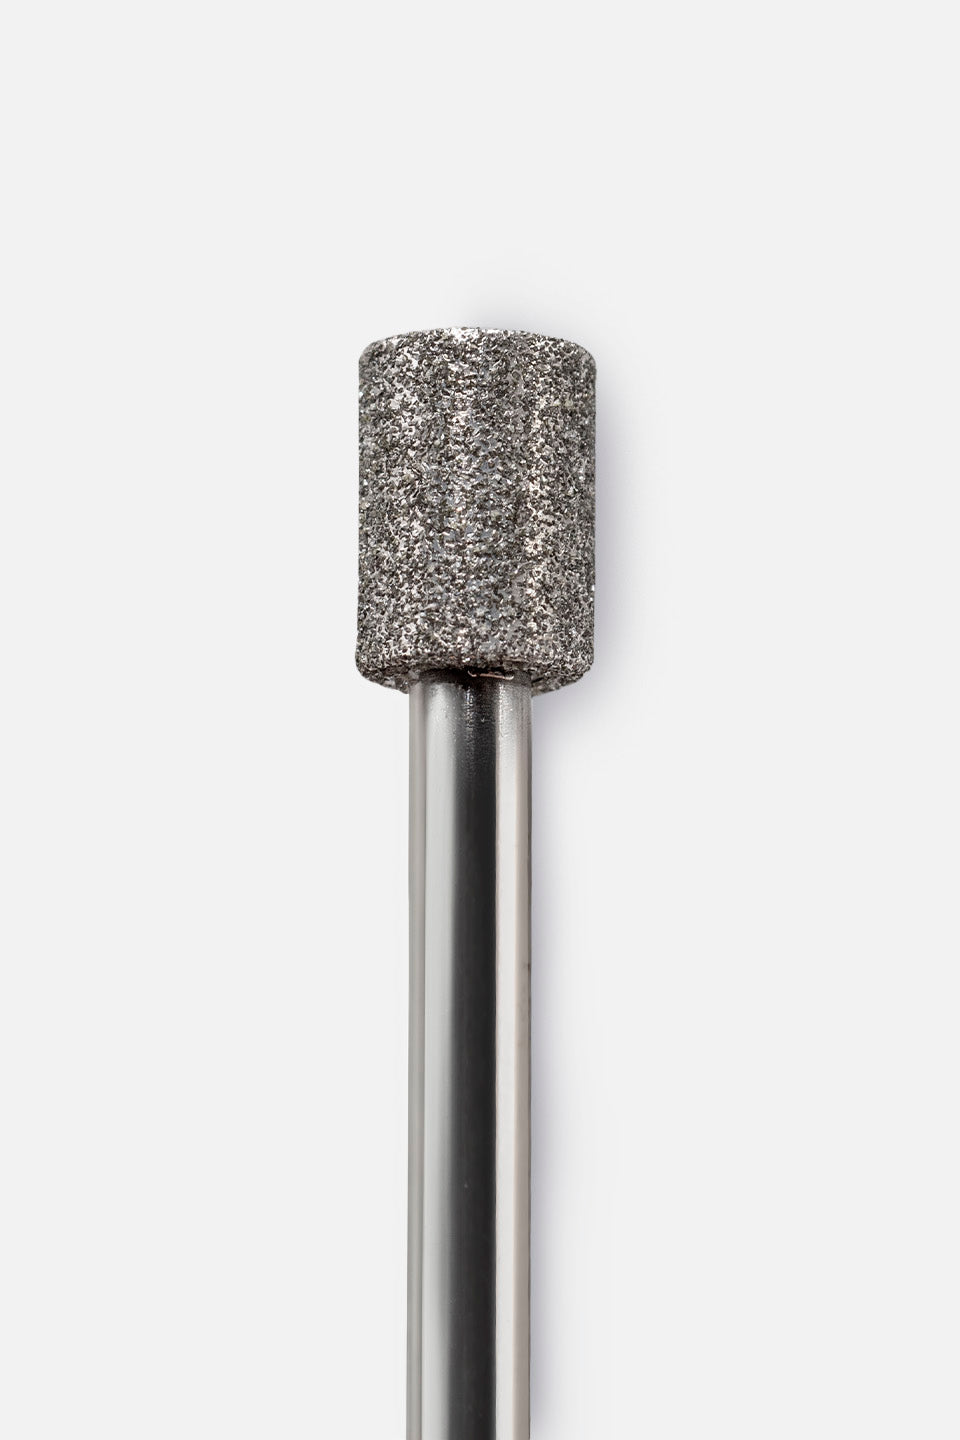 Fresa micromotor de diamante cilíndrica plana gr. medio